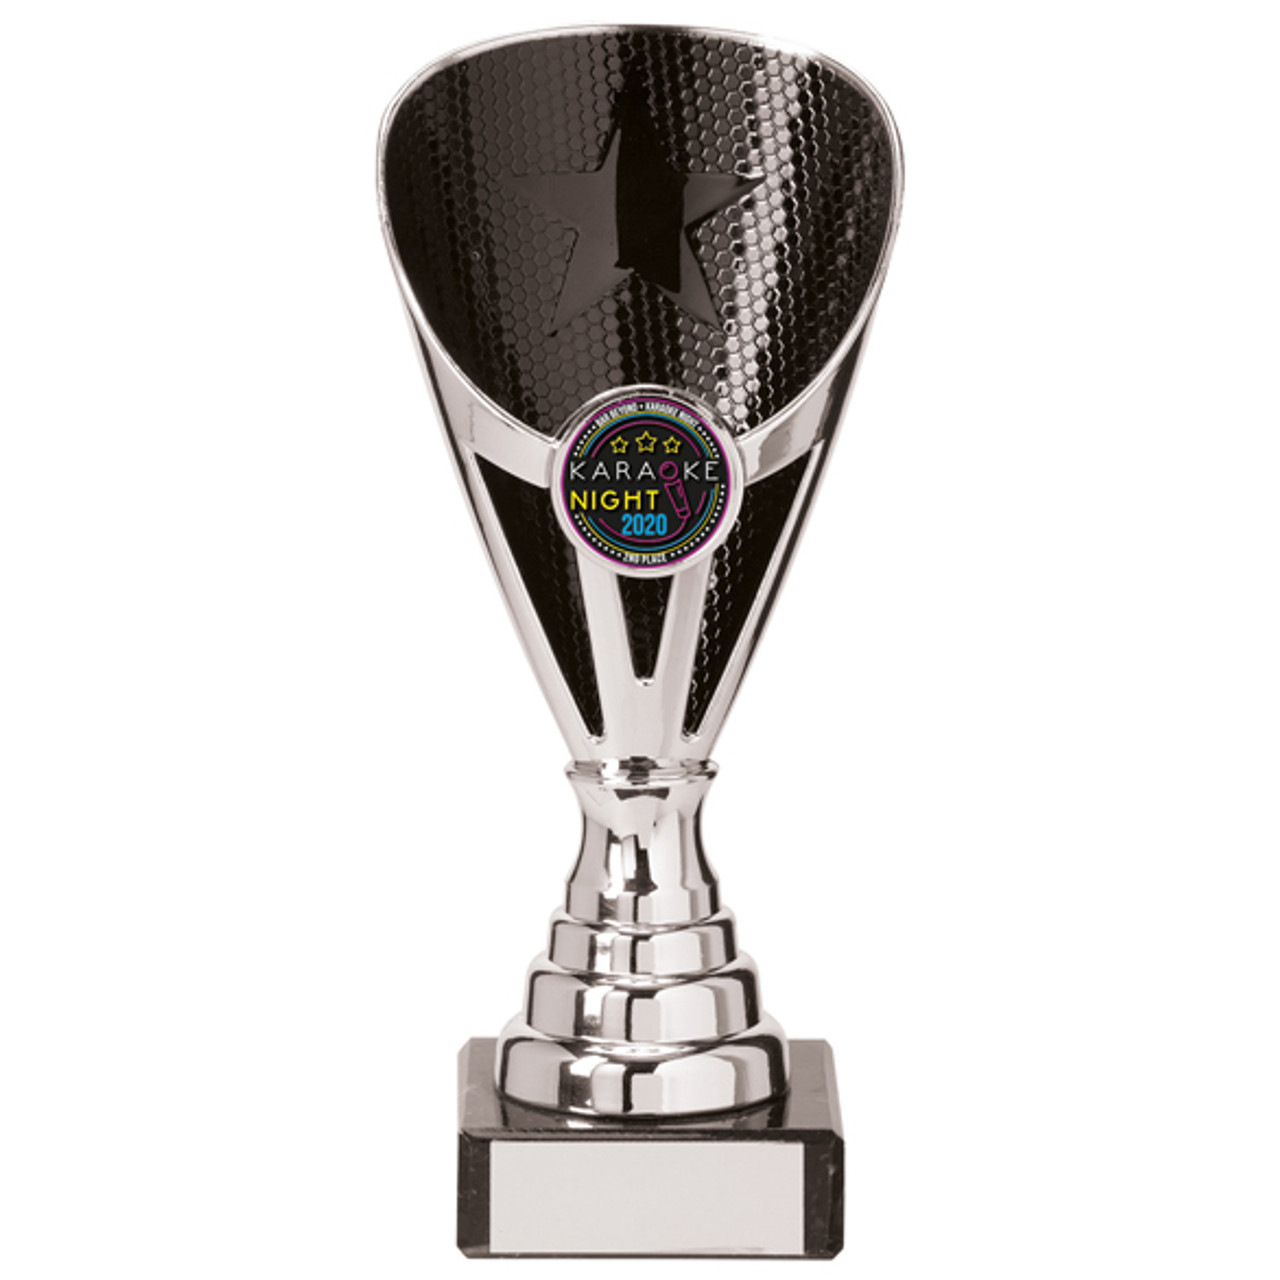 RISING STAR PREMIUM Silver & Black Cup Trophy Series